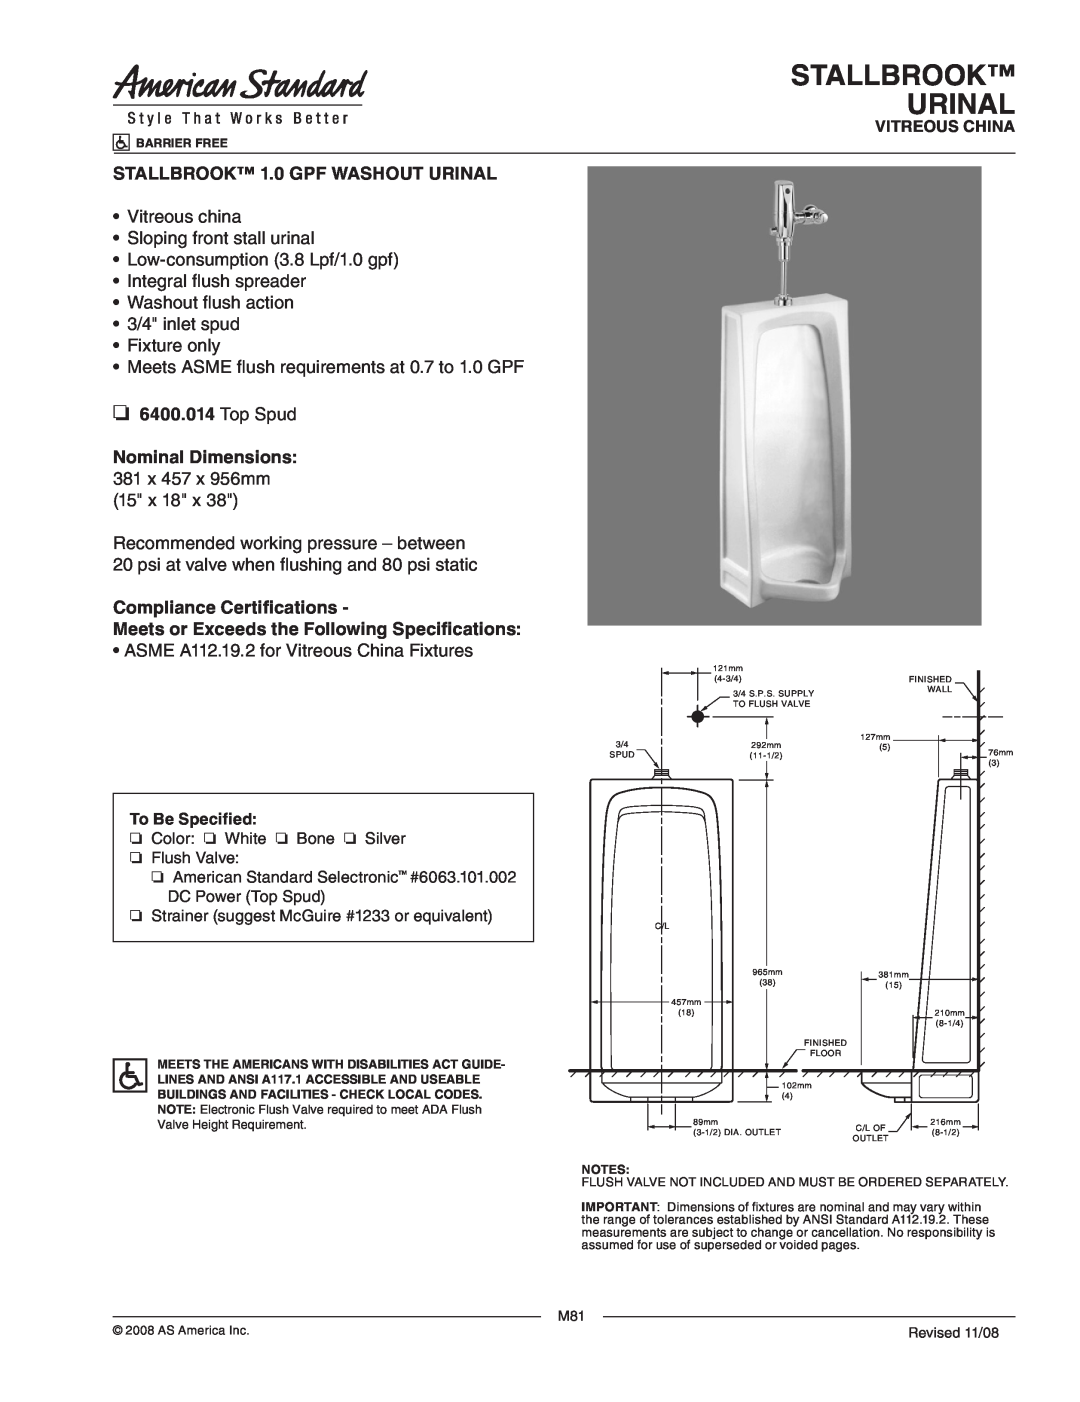 American Standard 6400.014 dimensions Stallbrook Urinal, STALLBROOK 1.0 GPF WASHOUT URINAL, Low-consumption3.8 Lpf/1.0 gpf 